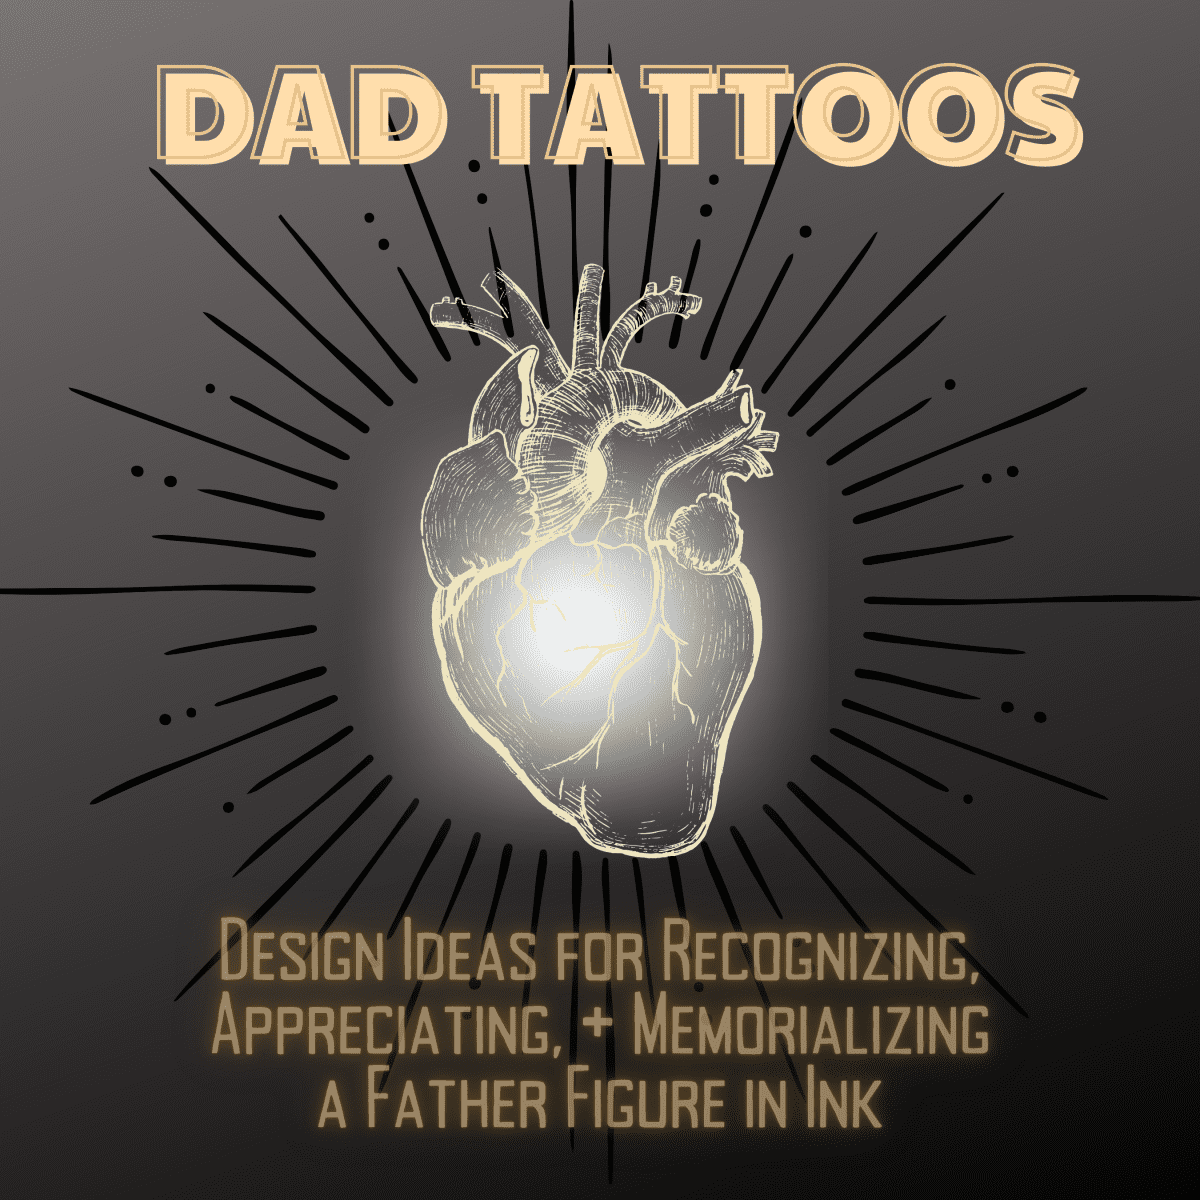 mom dad tattoo designs ideas | mom dad tattoo ideas 2K hd video | mom tattoo,  dad tattoo | - YouTube